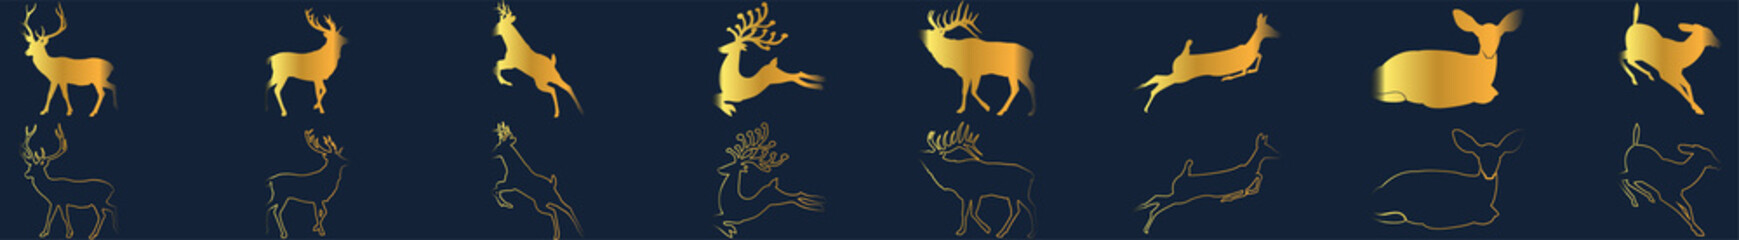 deer silhouette Collection of wild animals, cartoon deer's on background. Vector illustration